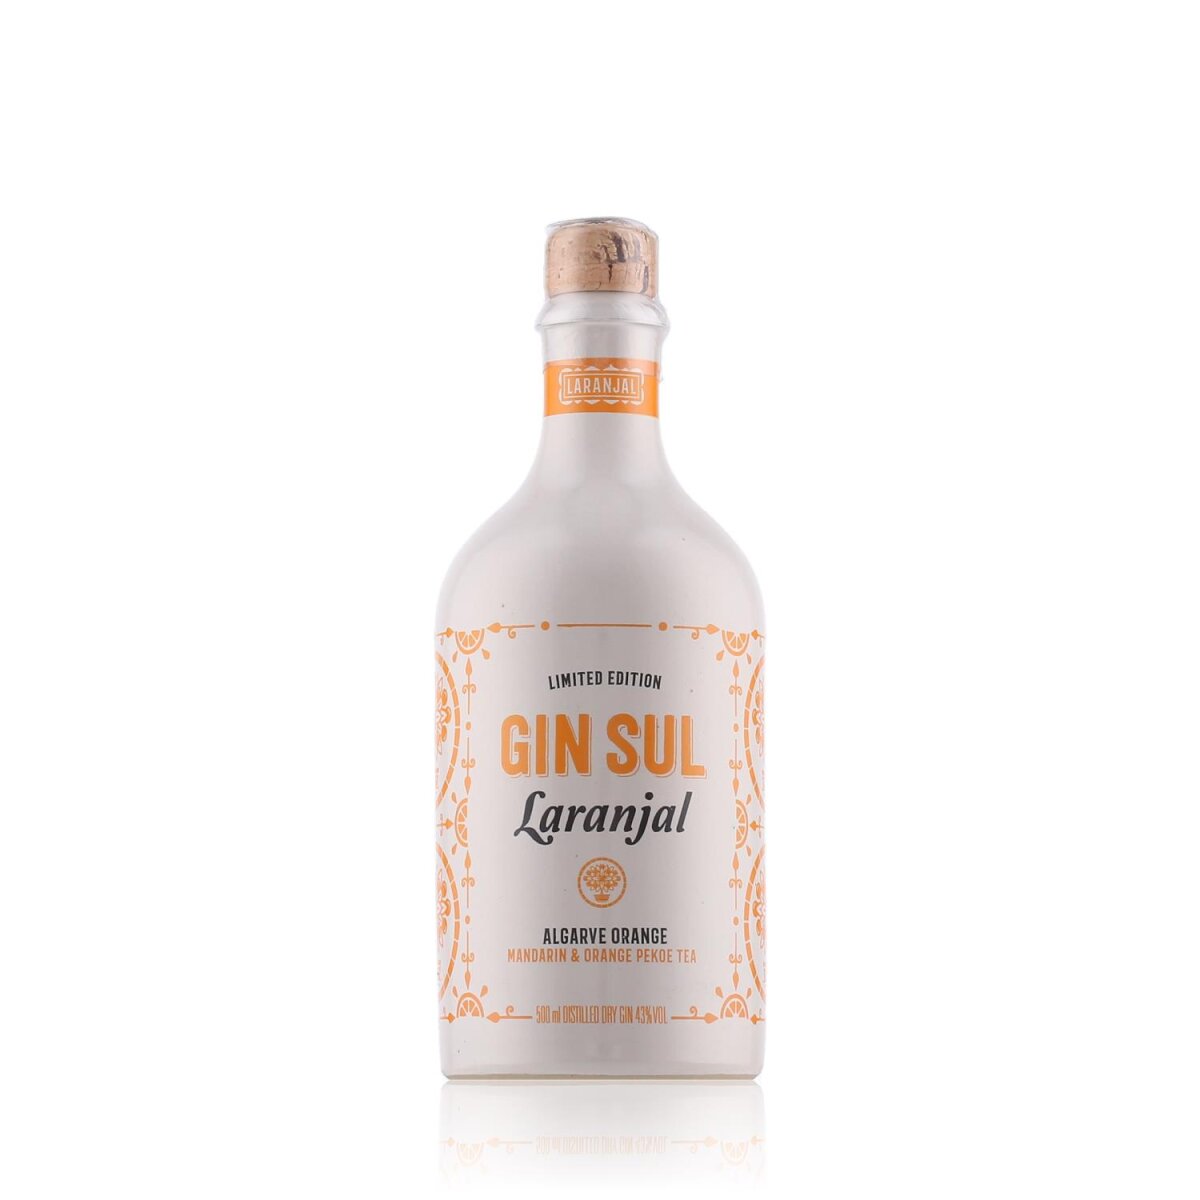 Gin Sul Laranjal Limited Edition 43% Vol. 0,5l, 27,49 €